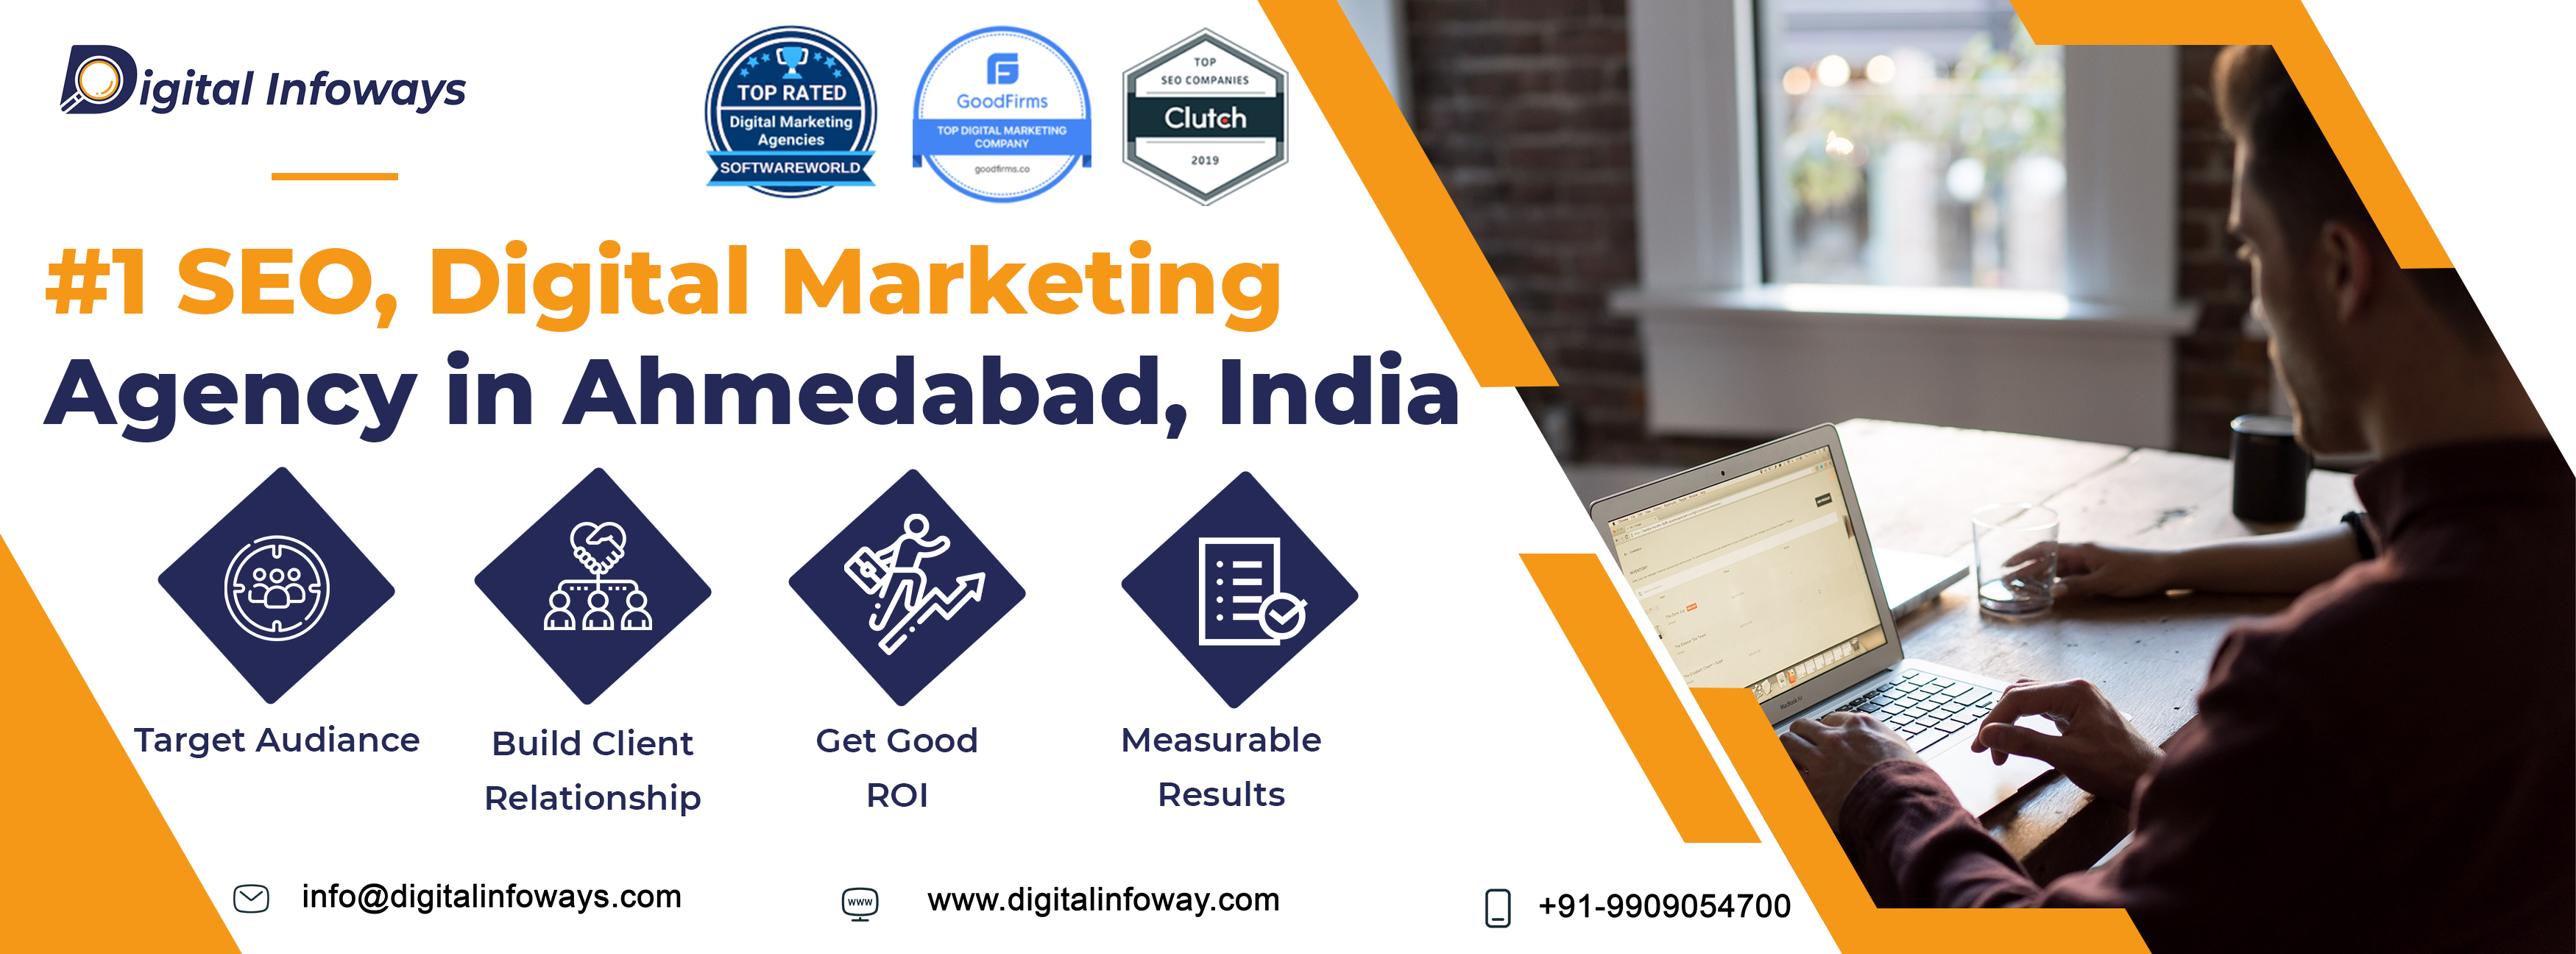 Digital Infoways - SEO, Digital Marketing Agency India